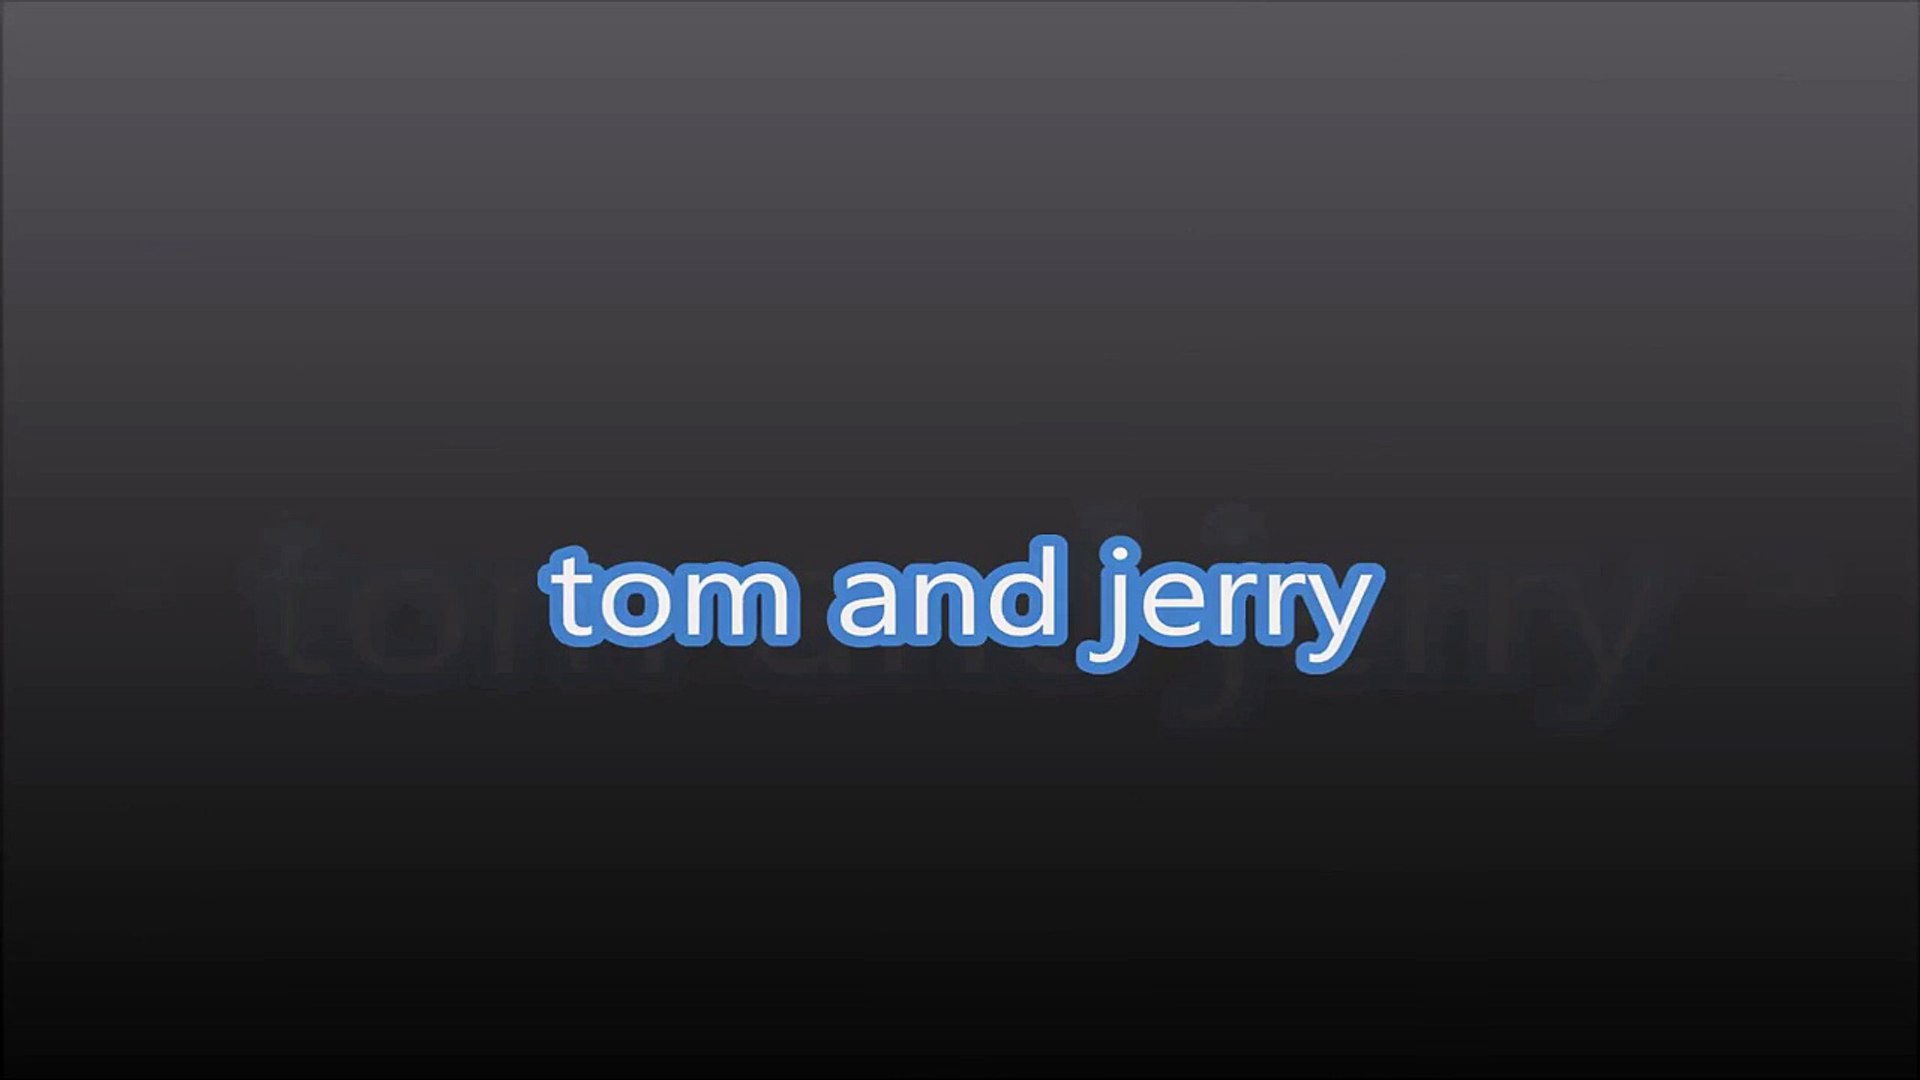 tom and jerry film animation 2015 الفيلم طوم وجيري